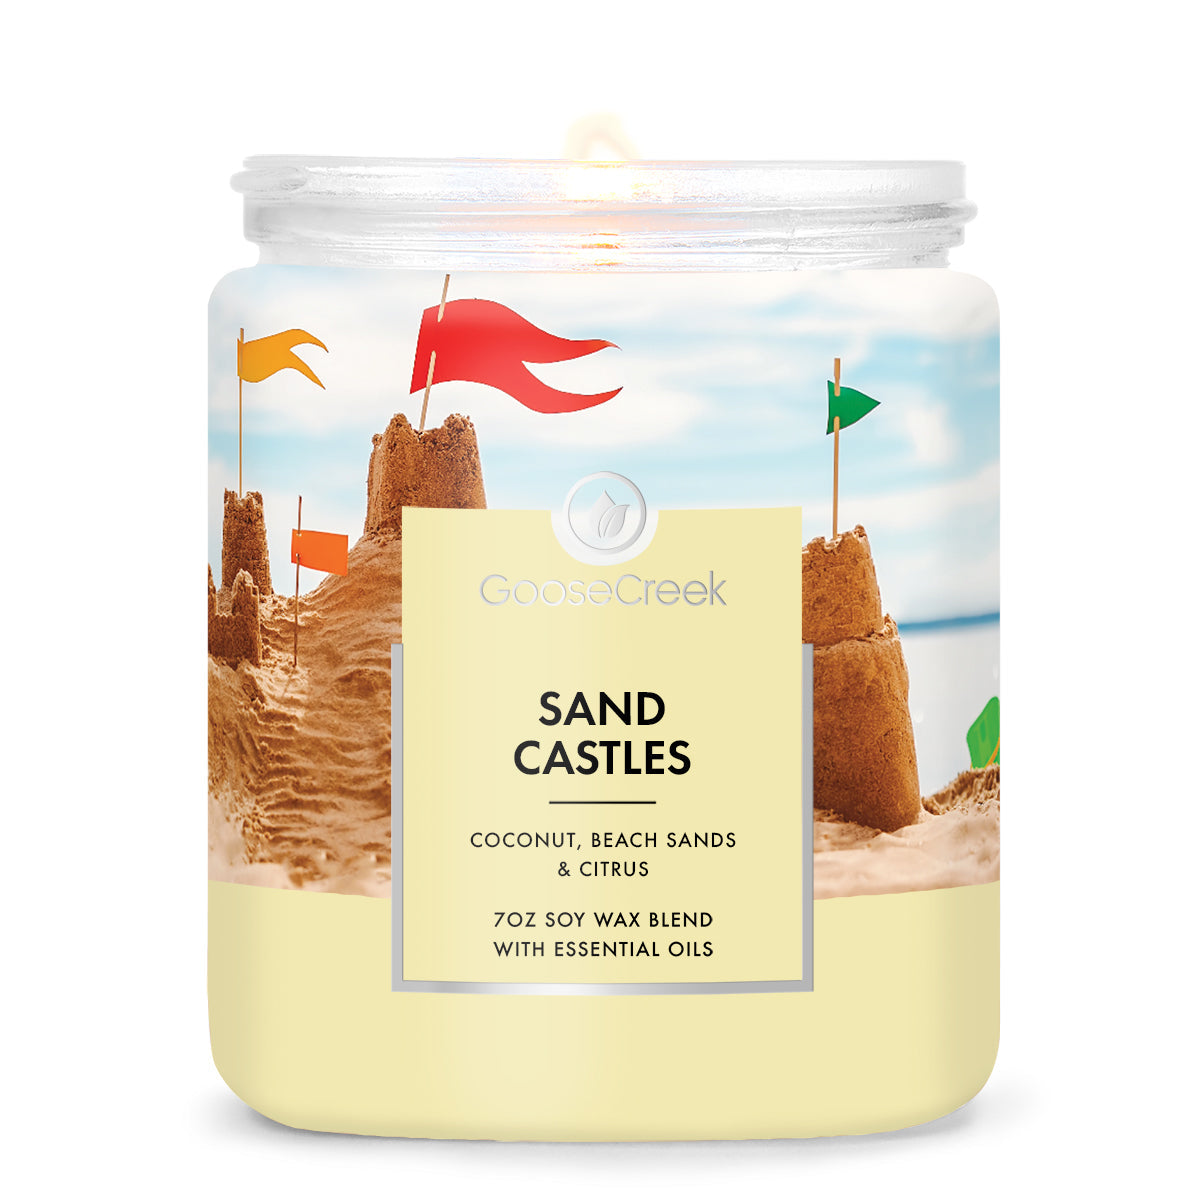 Sand Castles 7oz Single Wick Candle